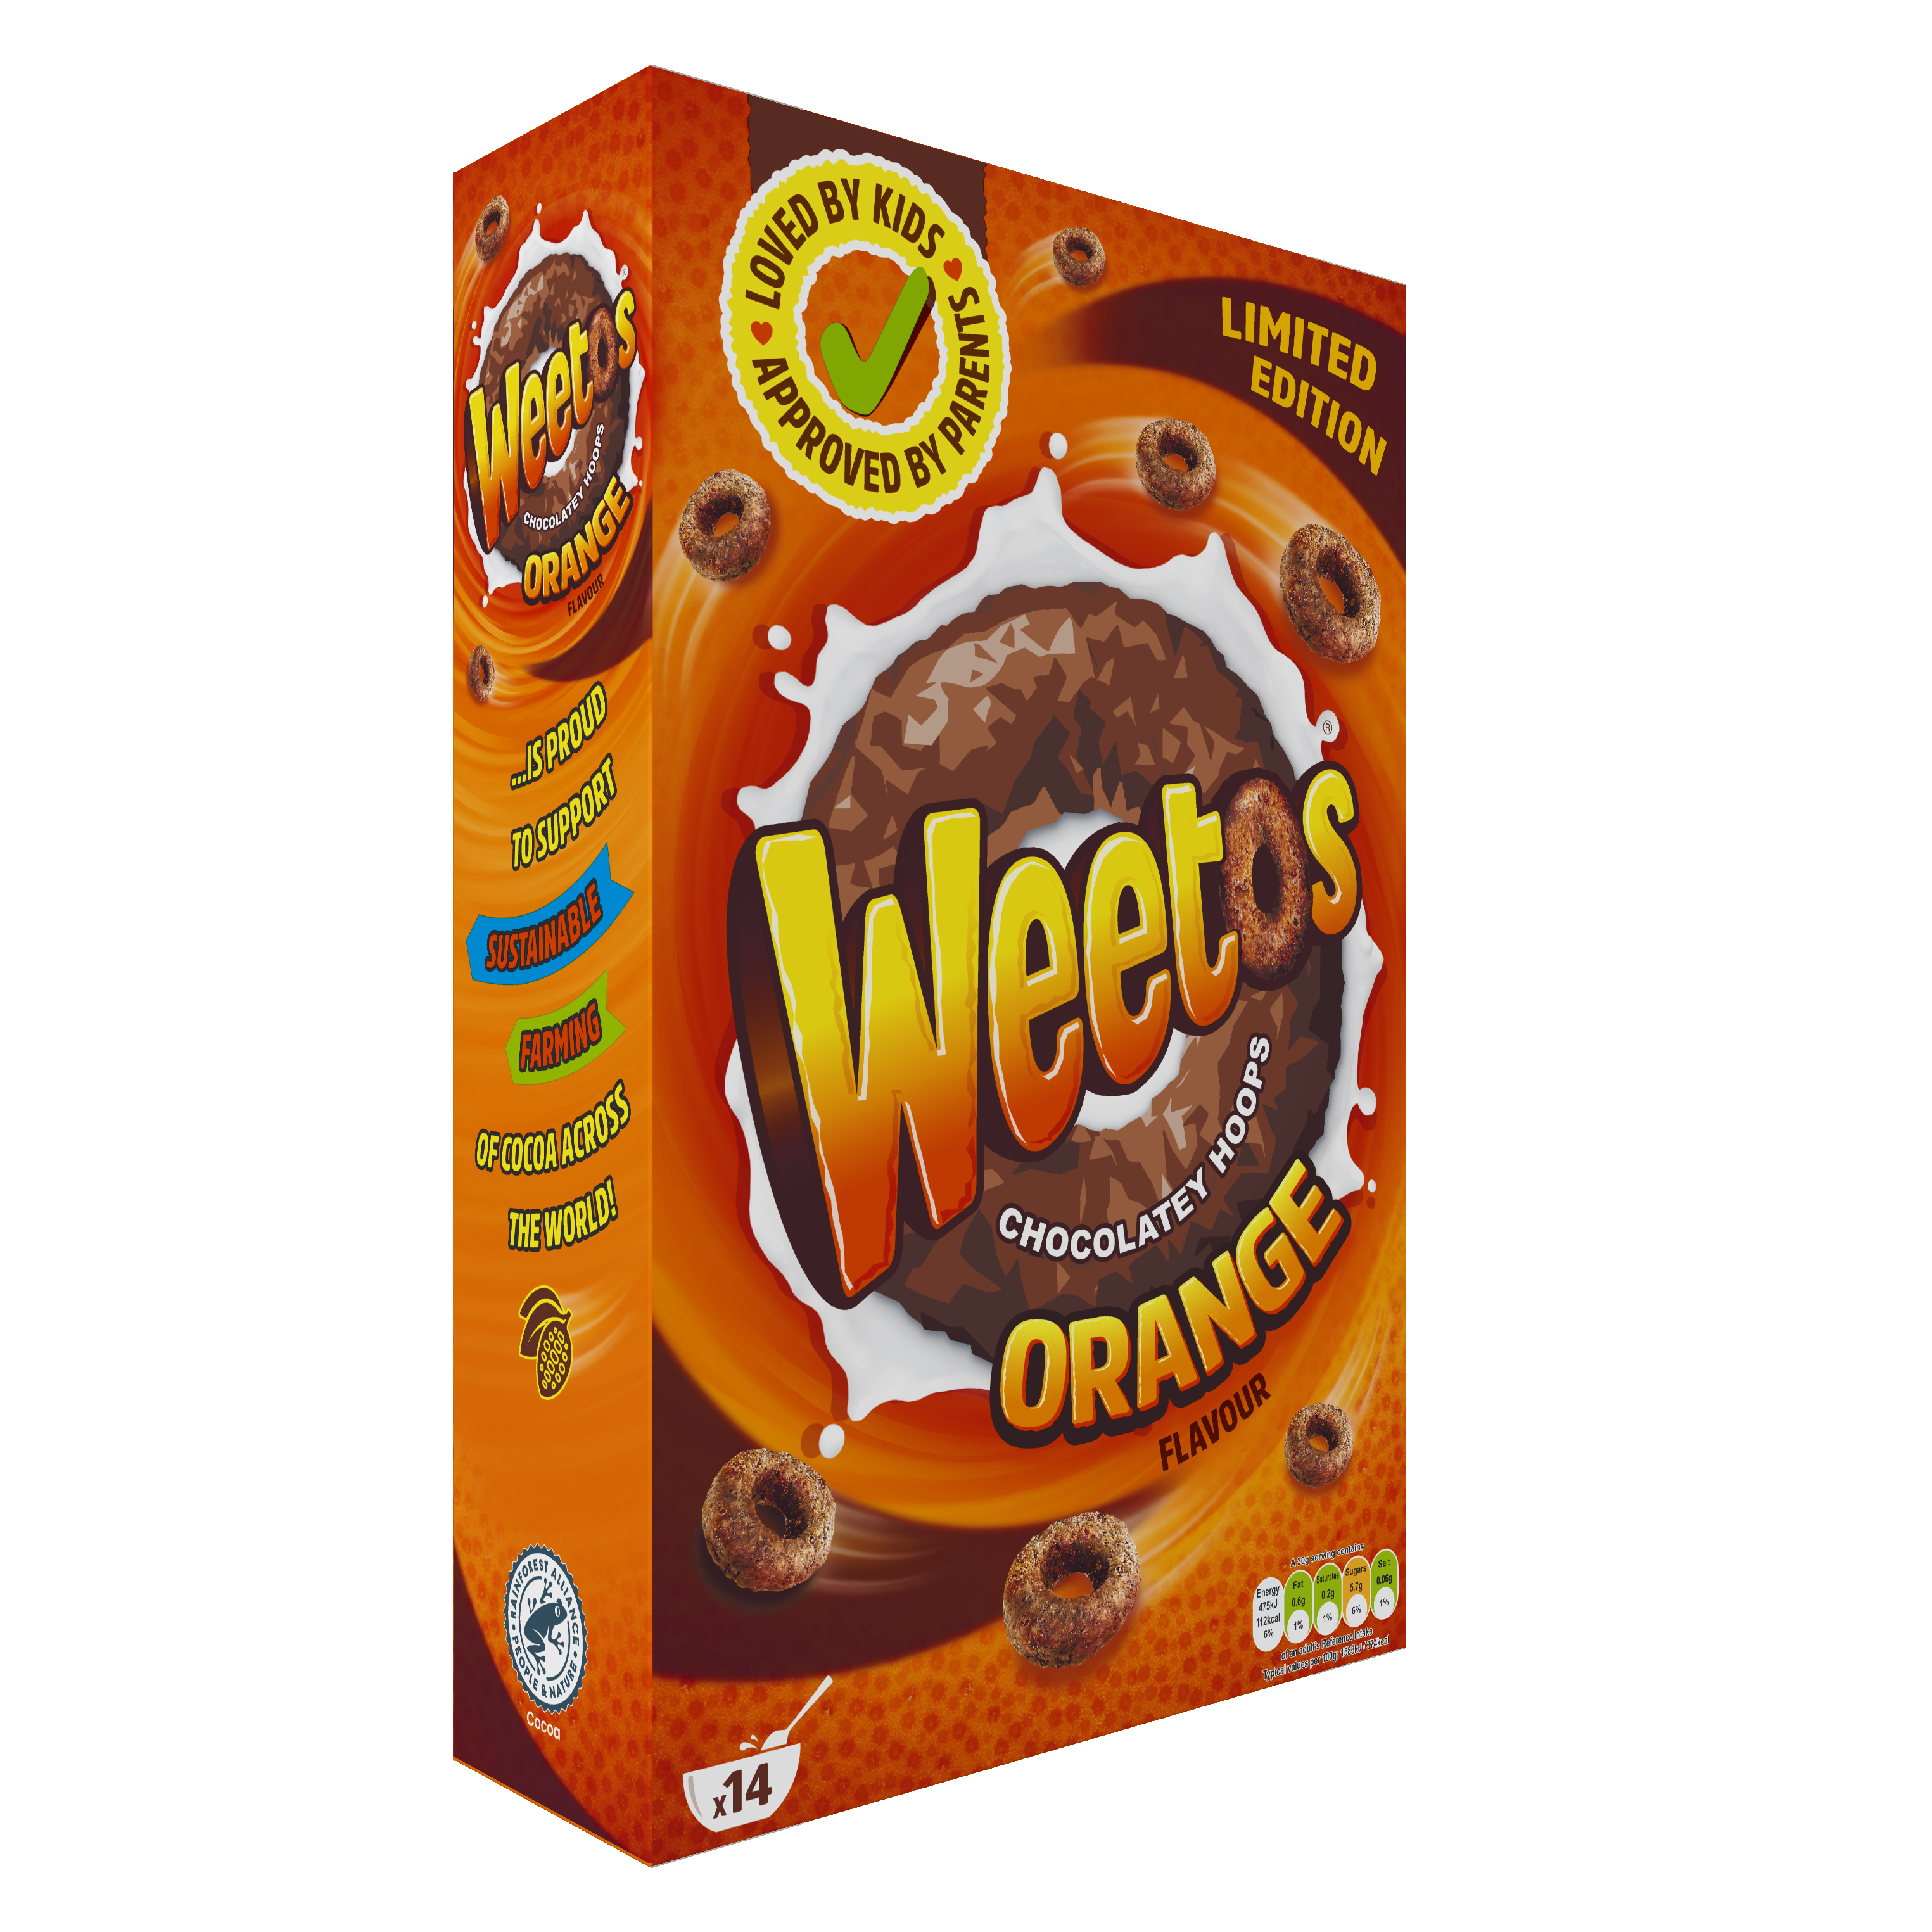 Weetos Orange Chocolatey Hoops are £2 at Asda